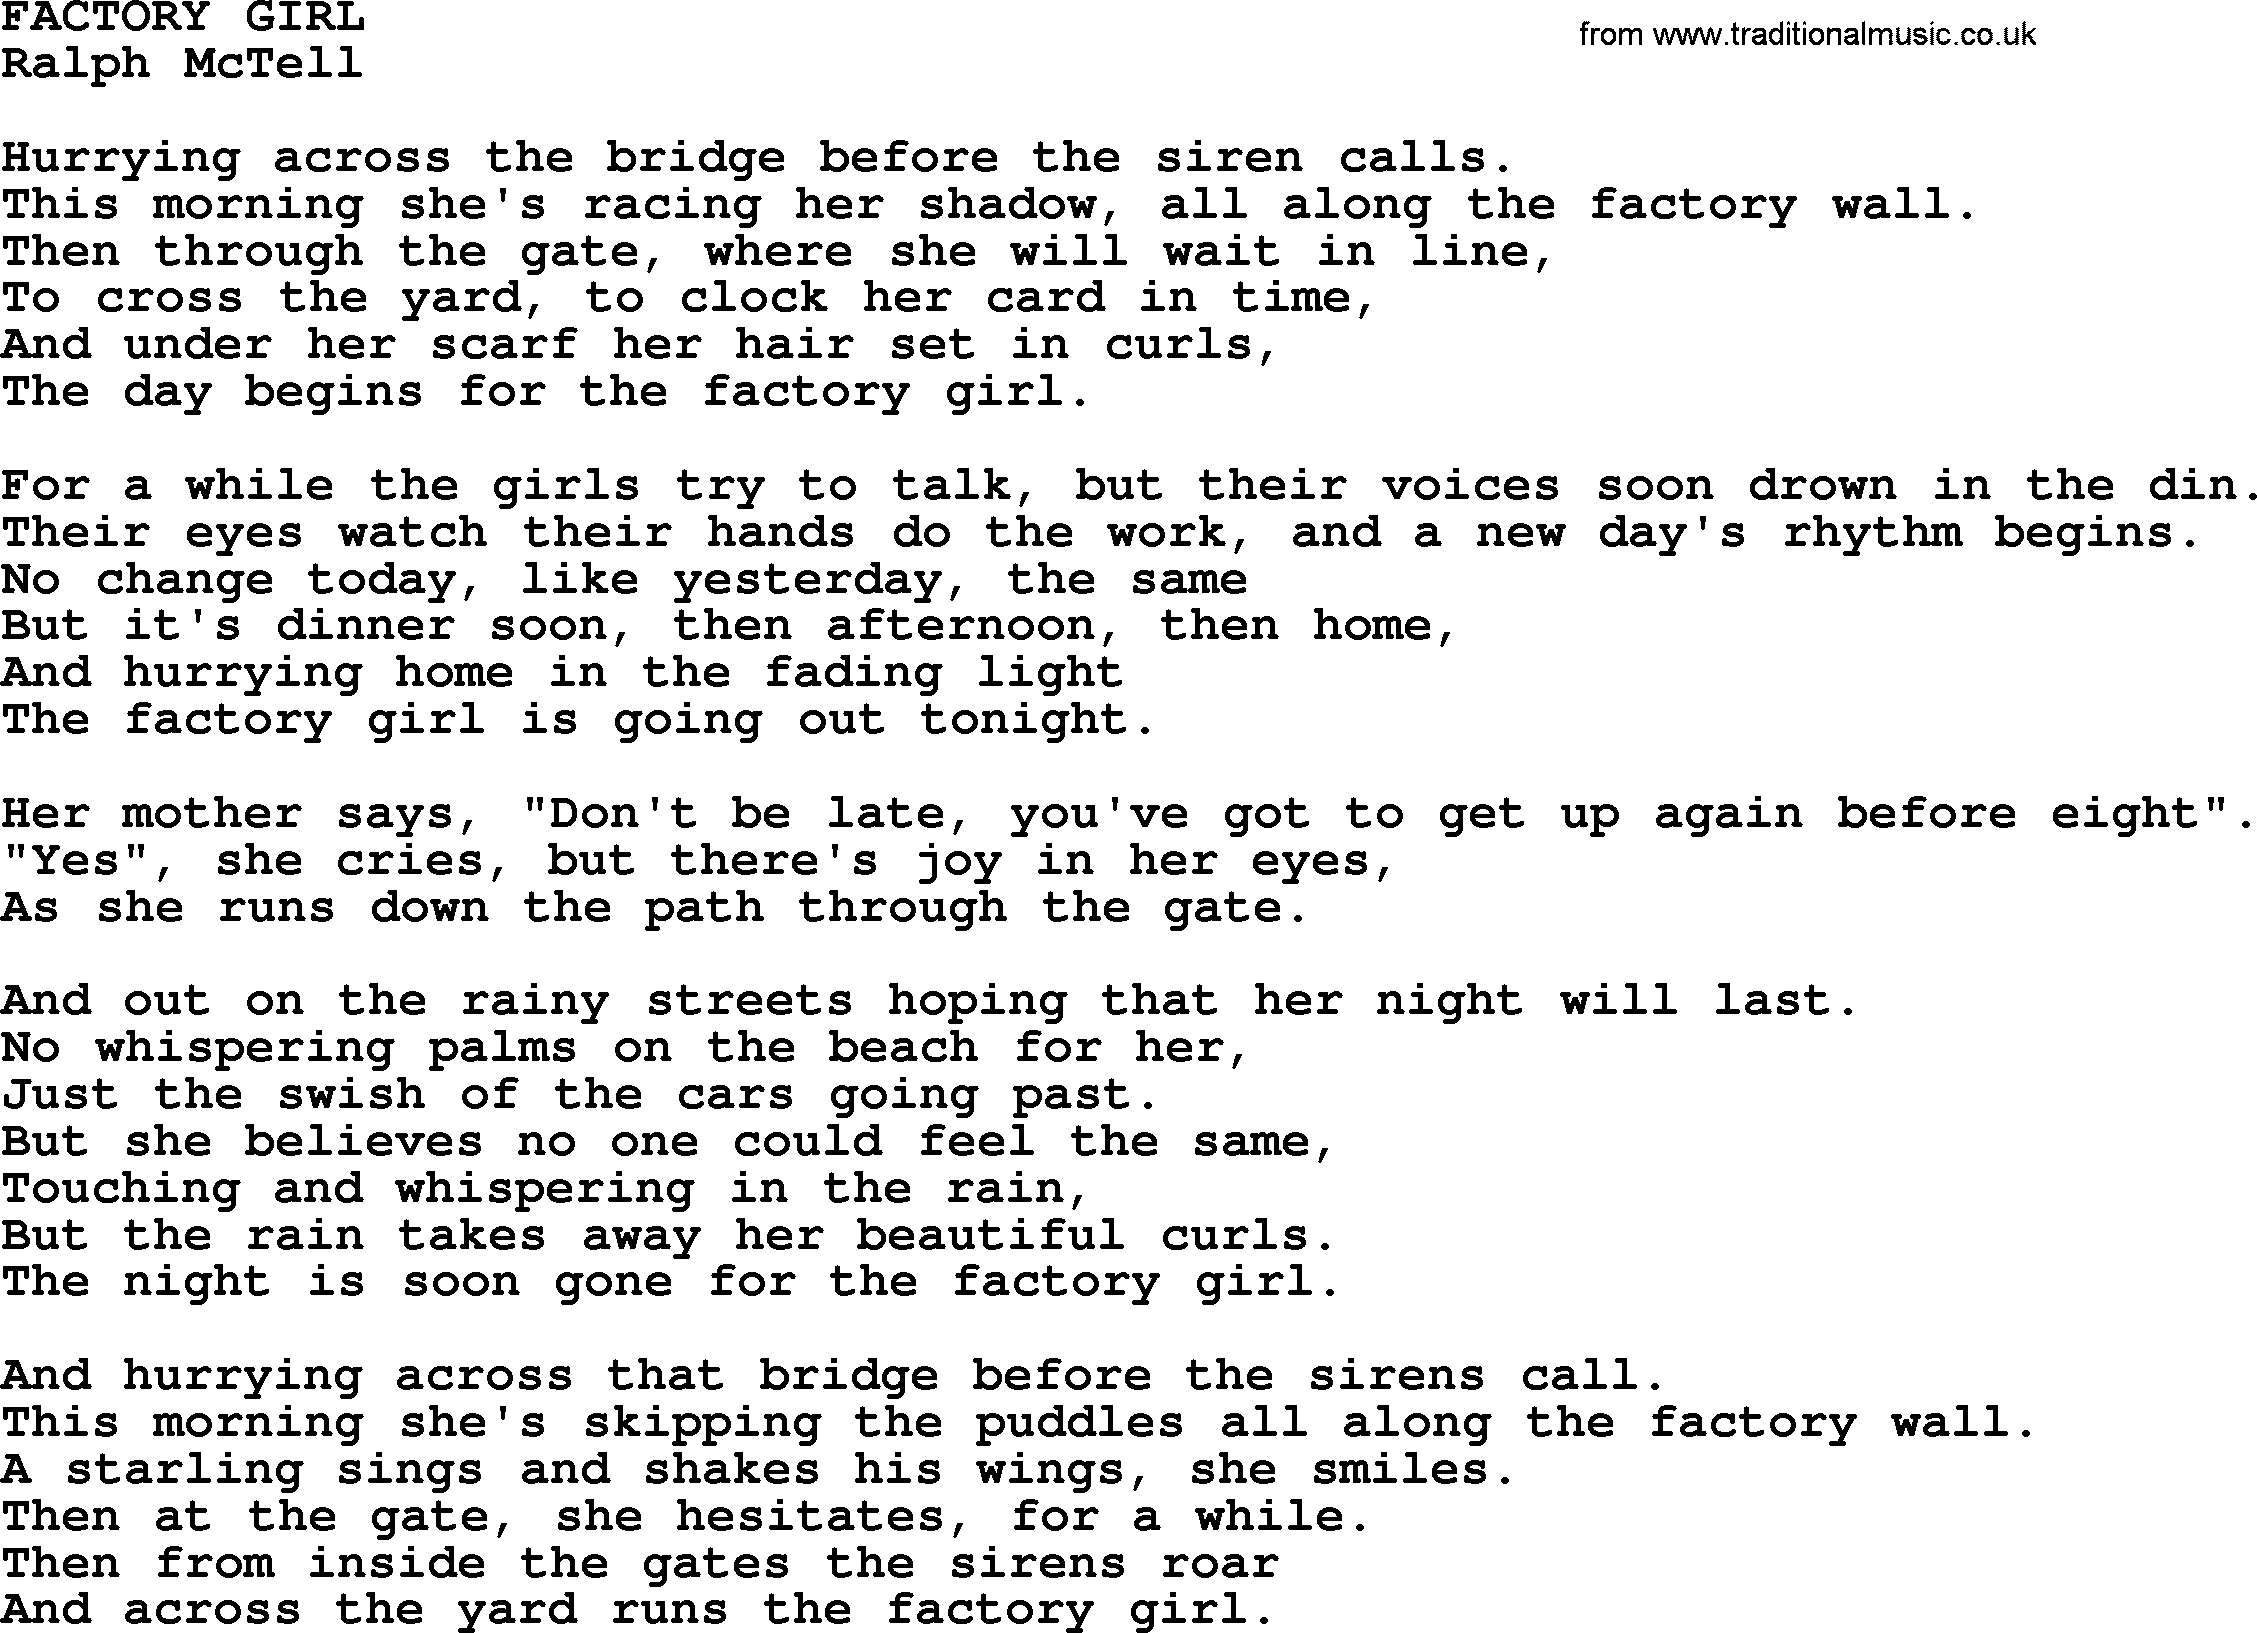 Ralph McTell Song: Factory Girl, lyrics